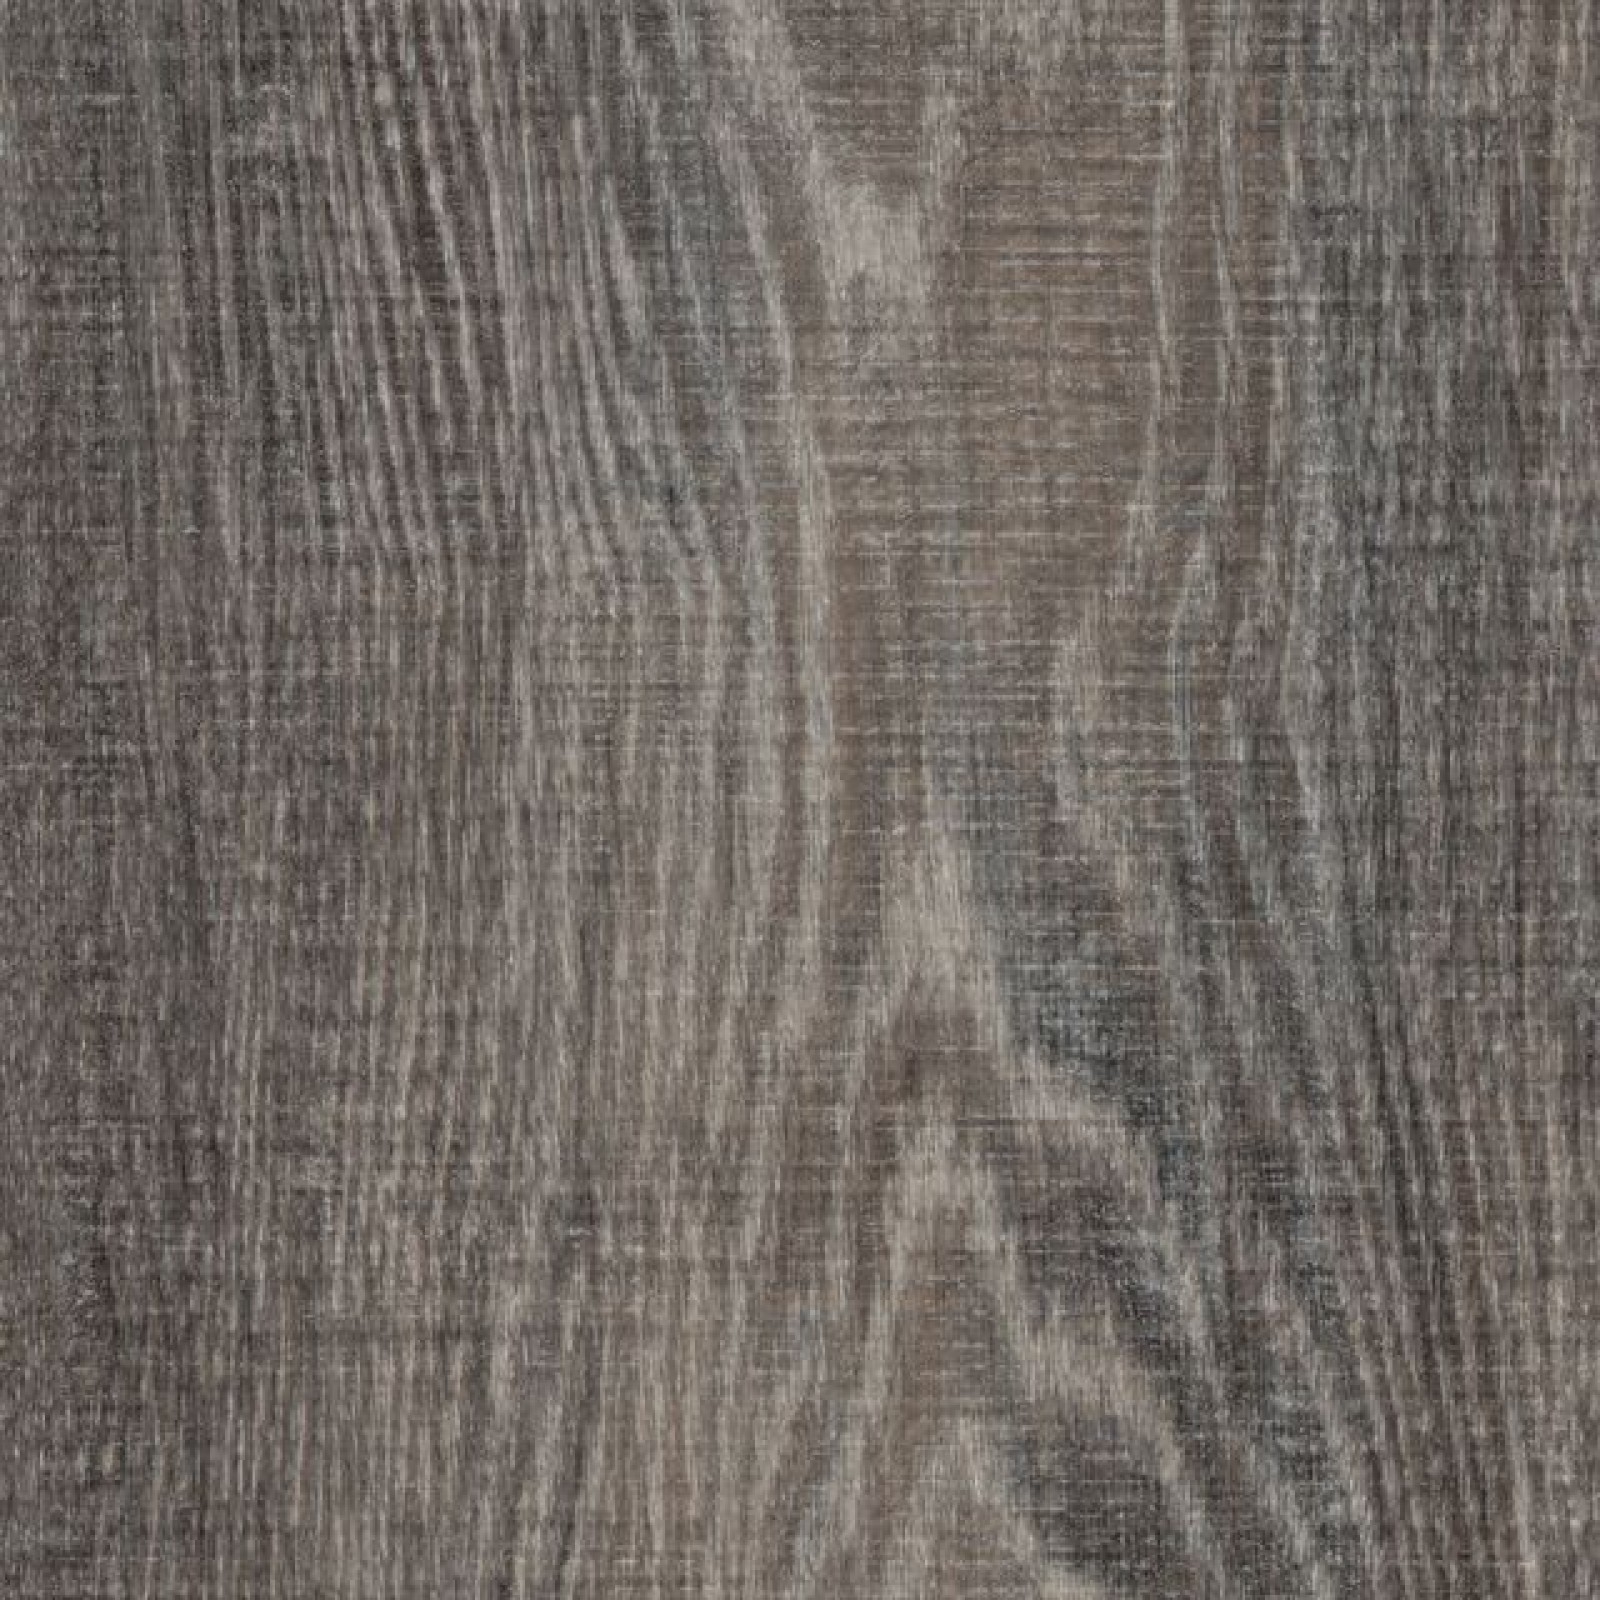 Vzor - 60152 grey raw timber